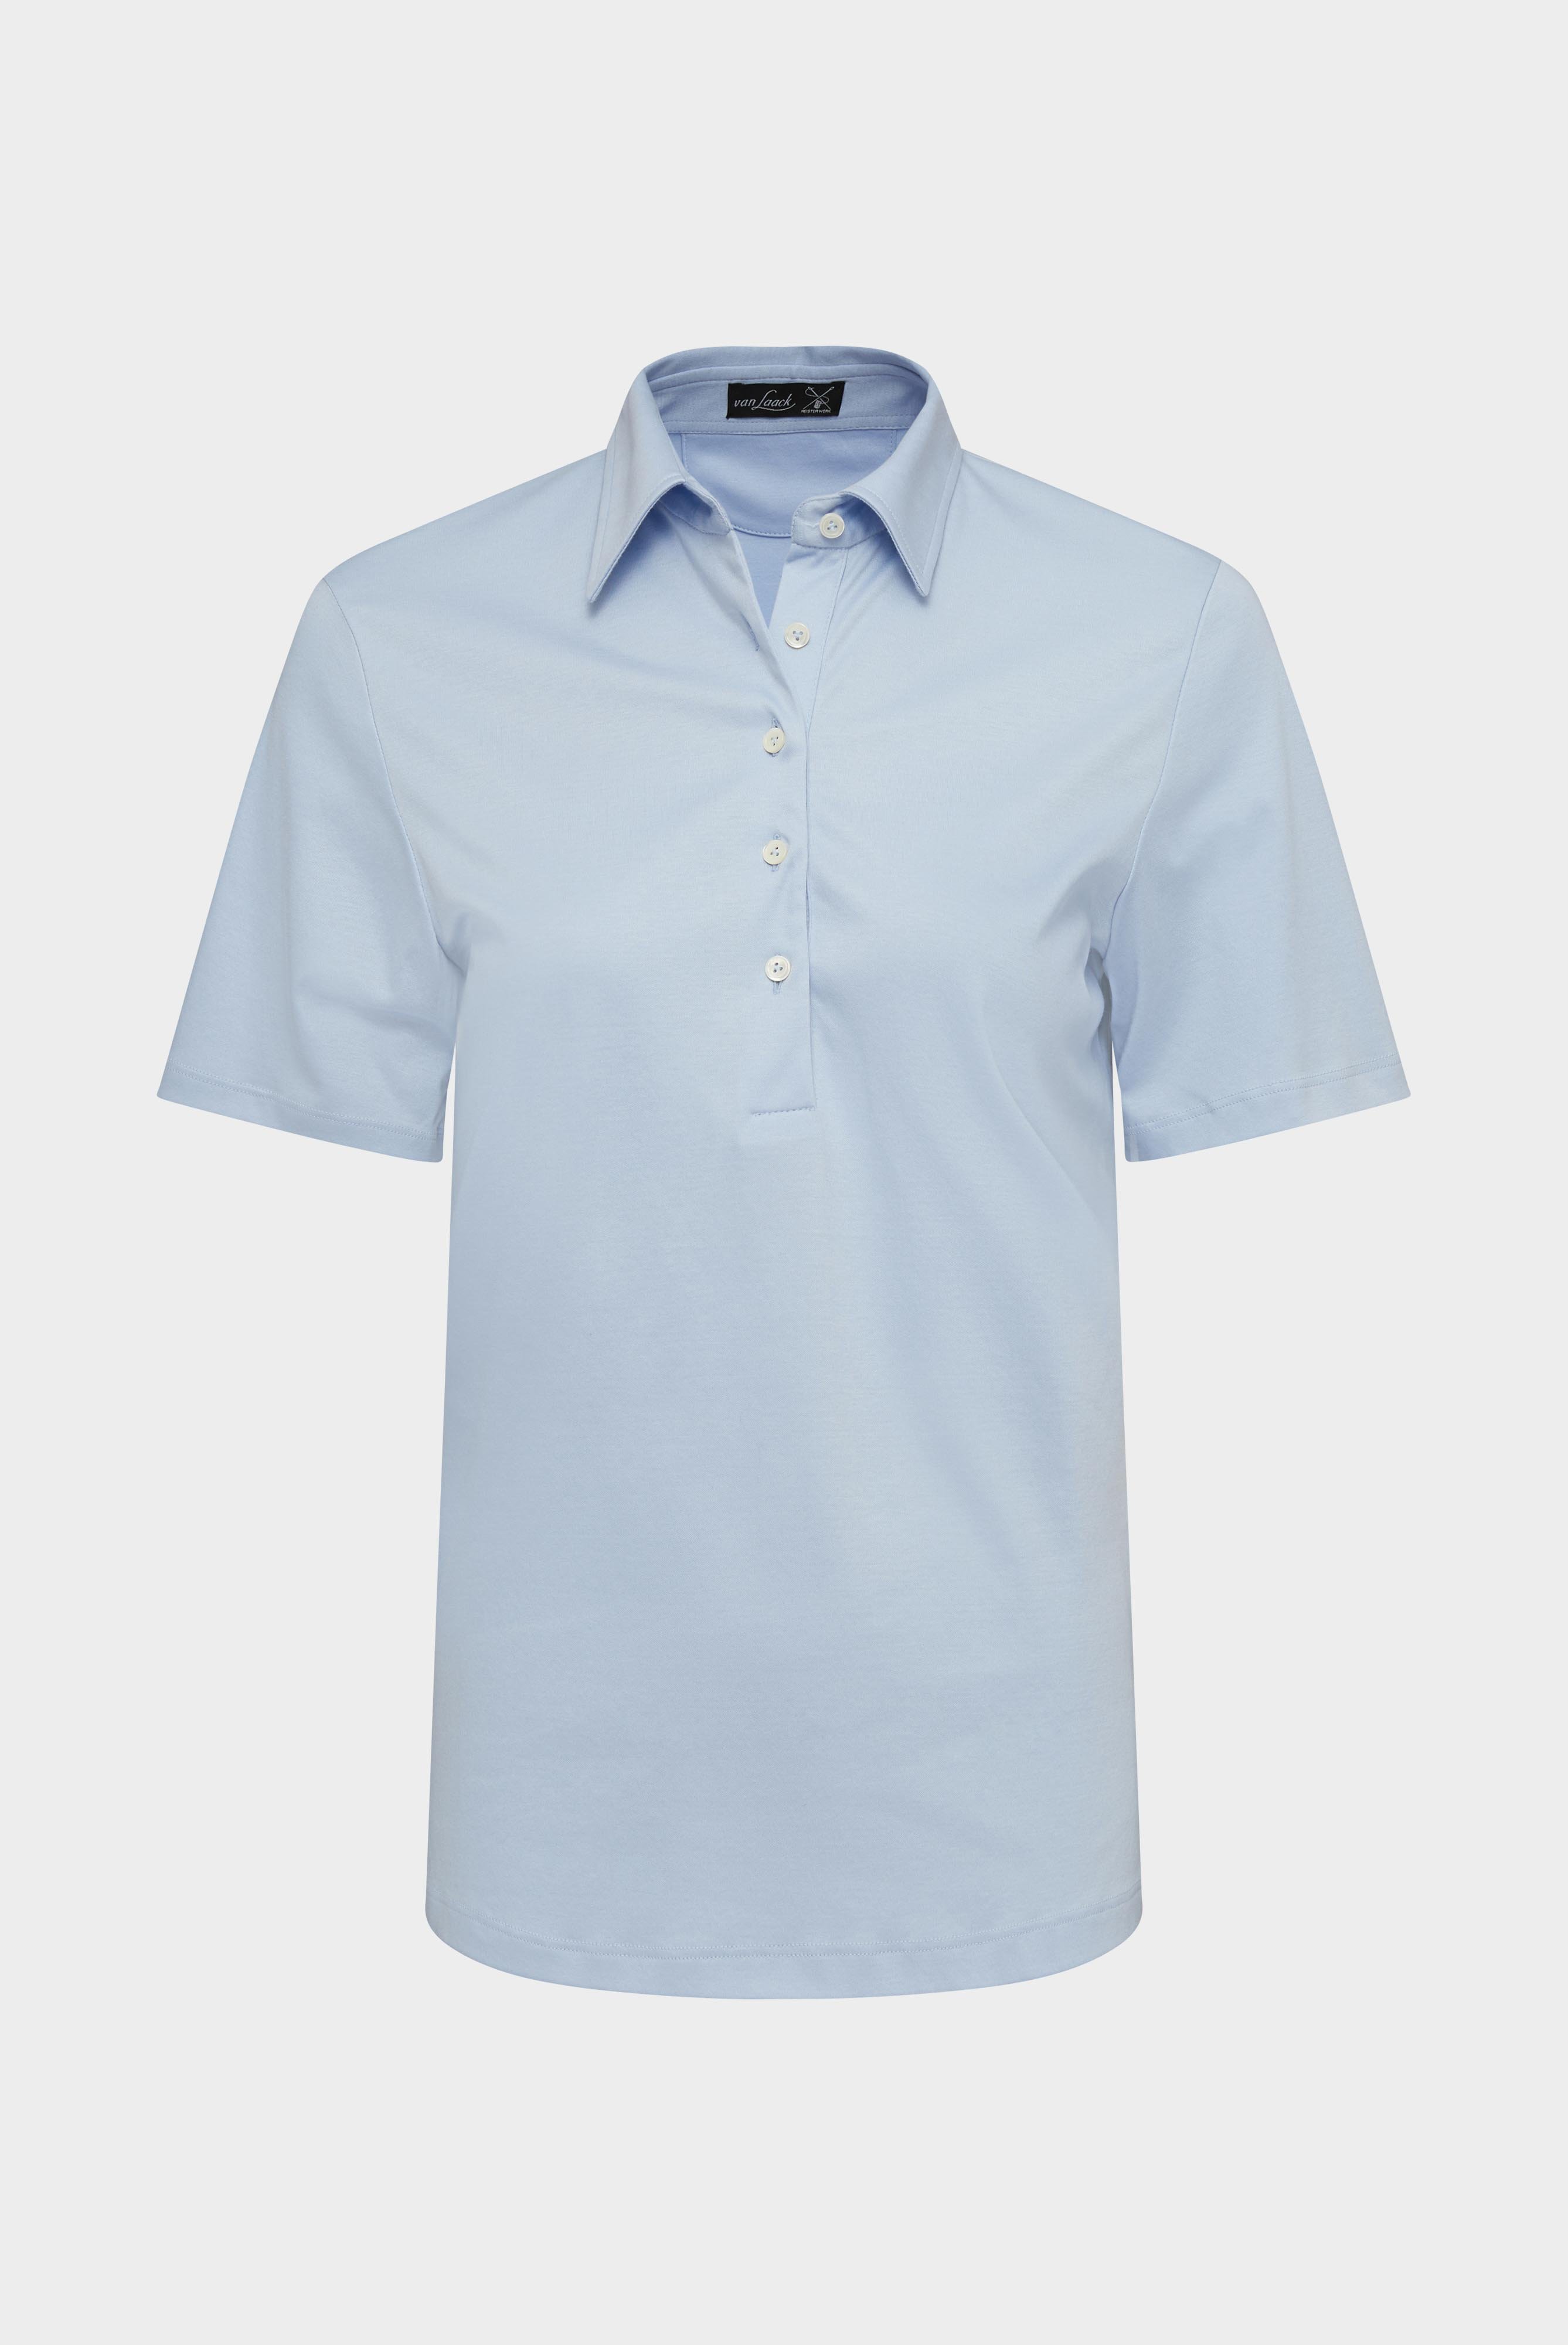 Tops & T-Shirts+Classic Swiss Cotton Polo Shirt+05.2523.07.180031.720.32